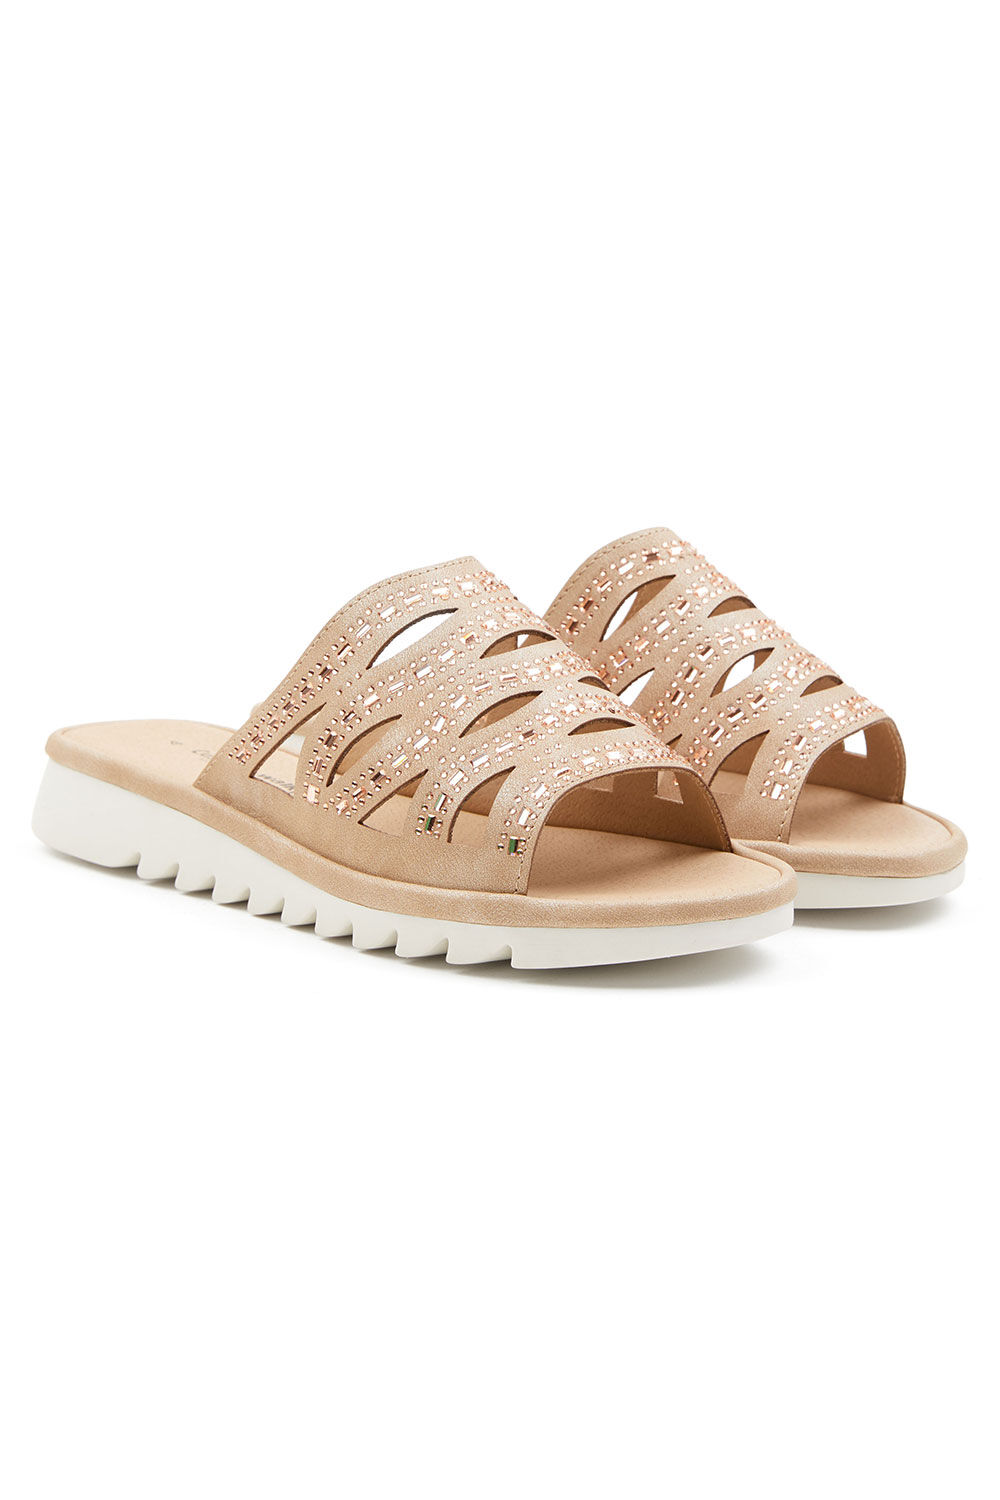 Bonmarche Tan Cut Out Weave Sandals With Diamante Detail (eee Fit), Size: 3W (36)